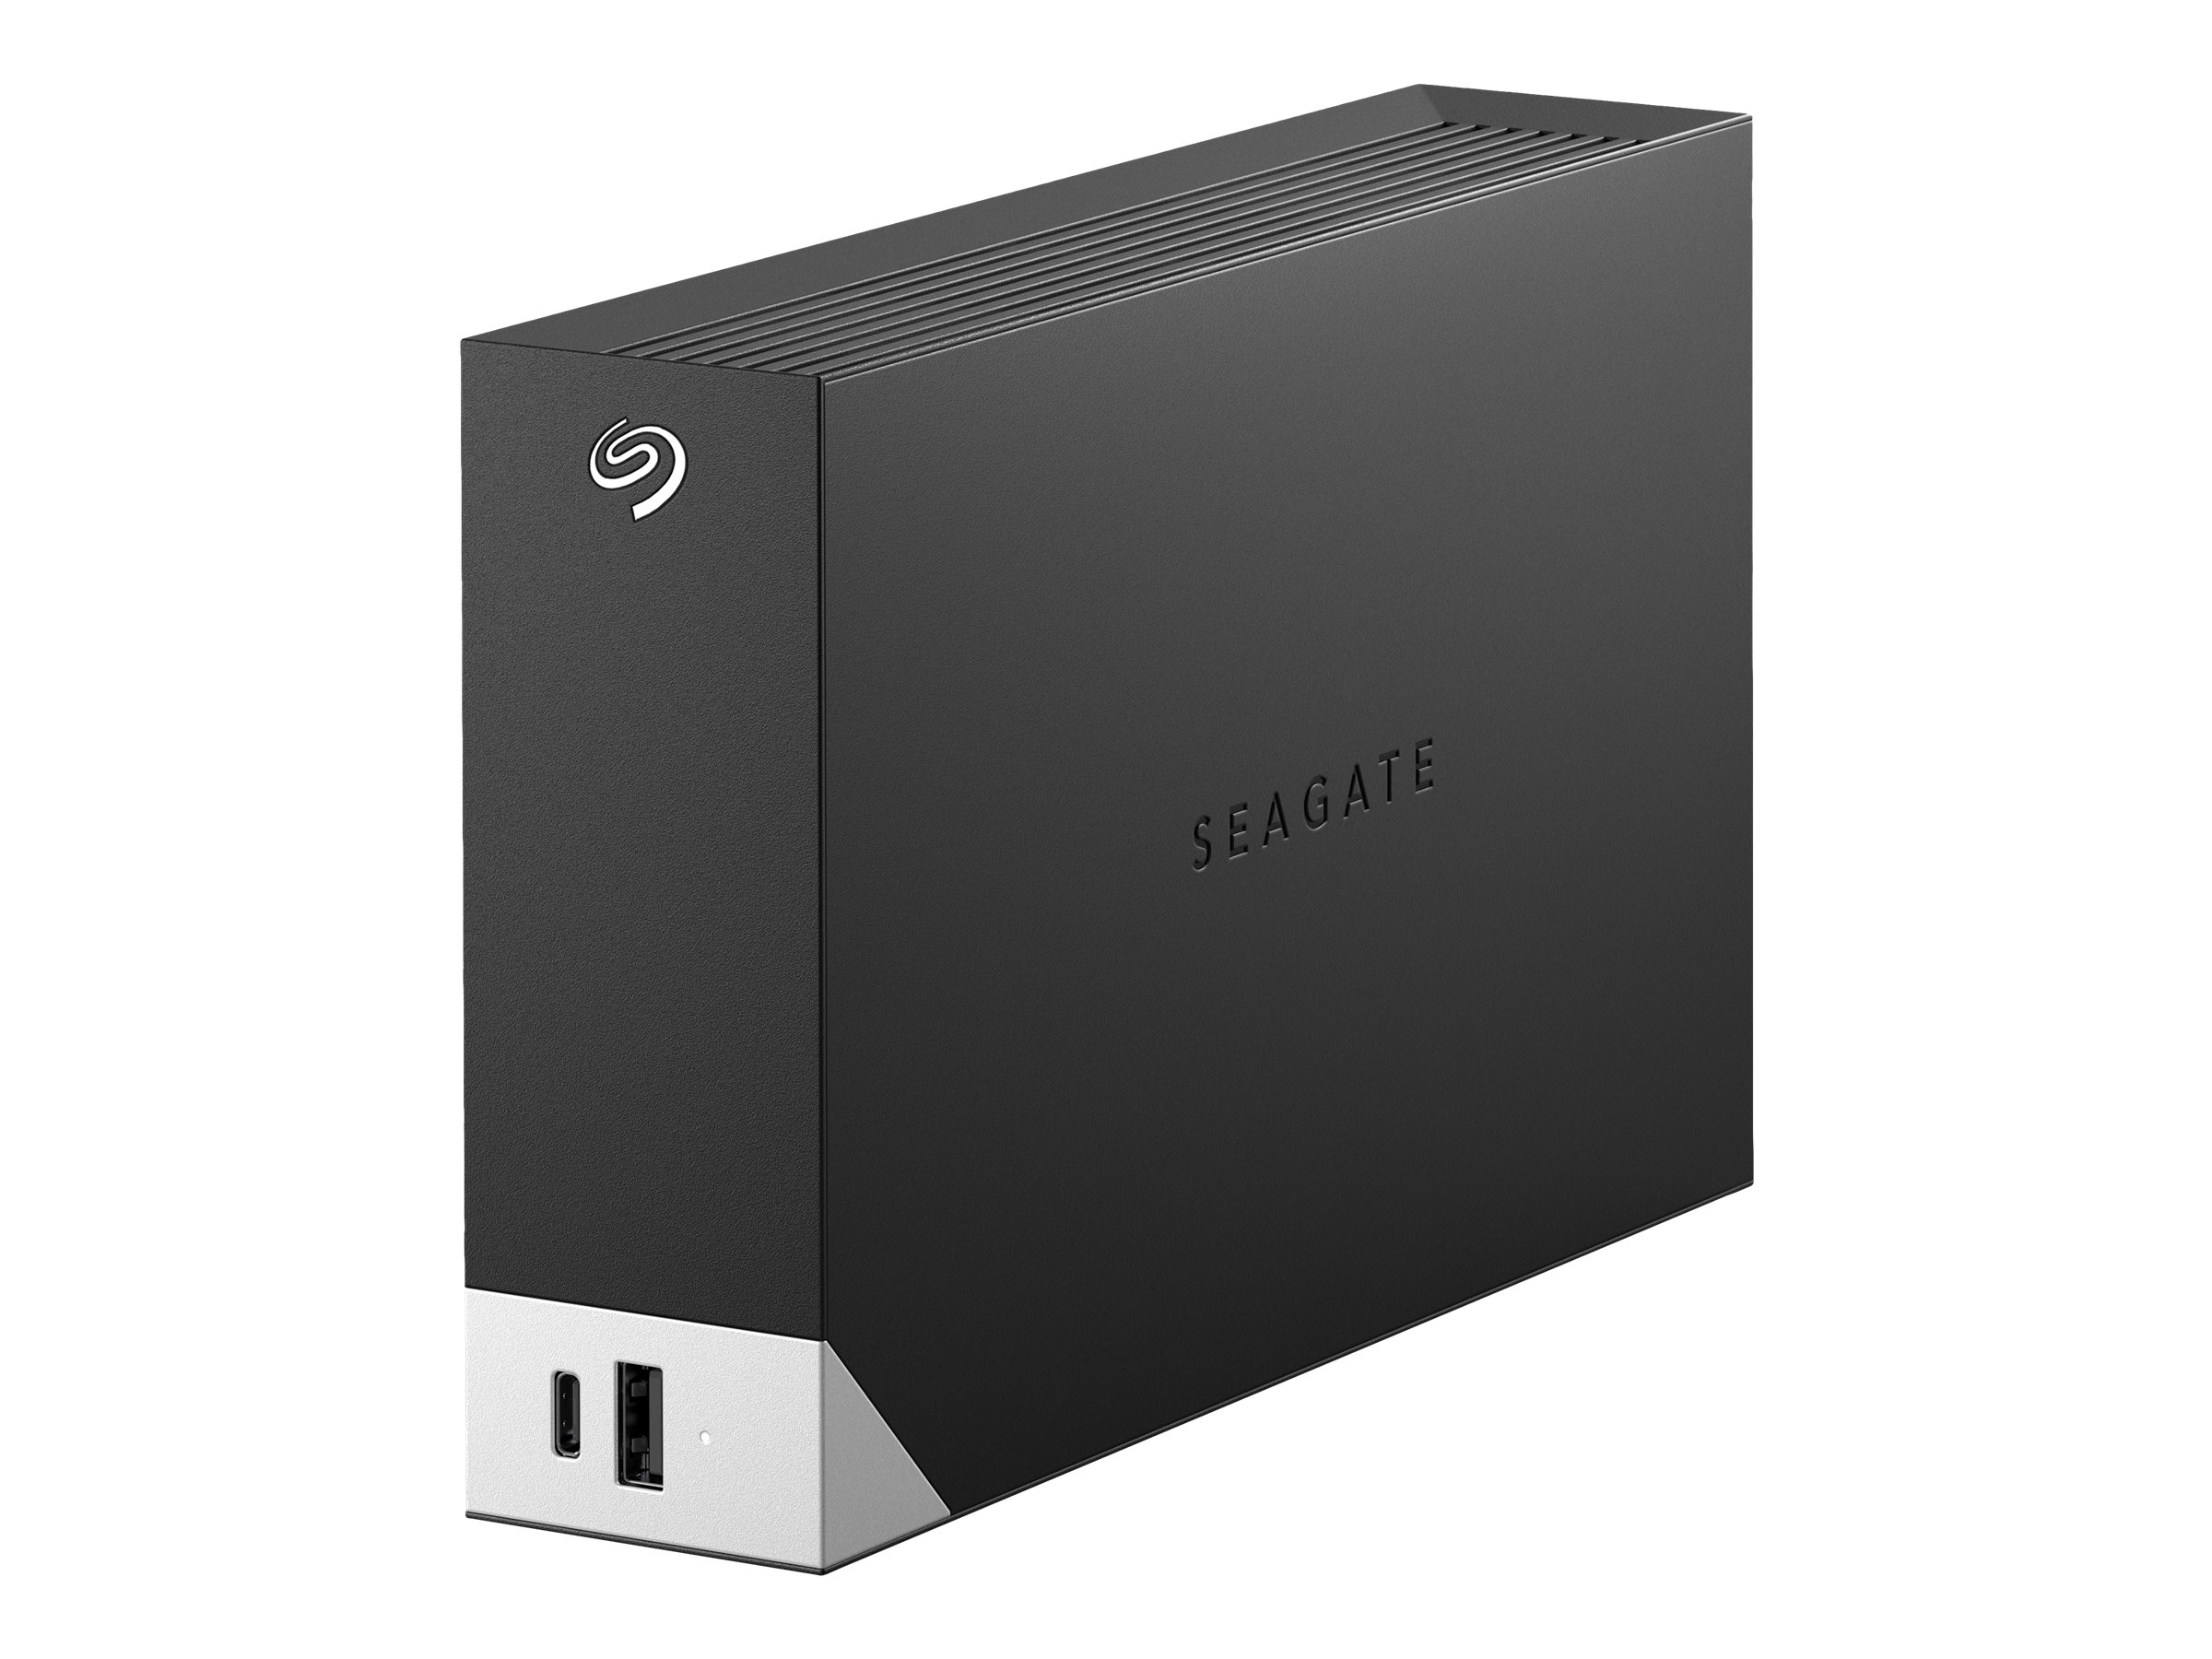 Seagate One Touch with hub STLC4000400 - Festplatte - 4 TB - extern (Stationär) - USB 3.0 - Schwarz